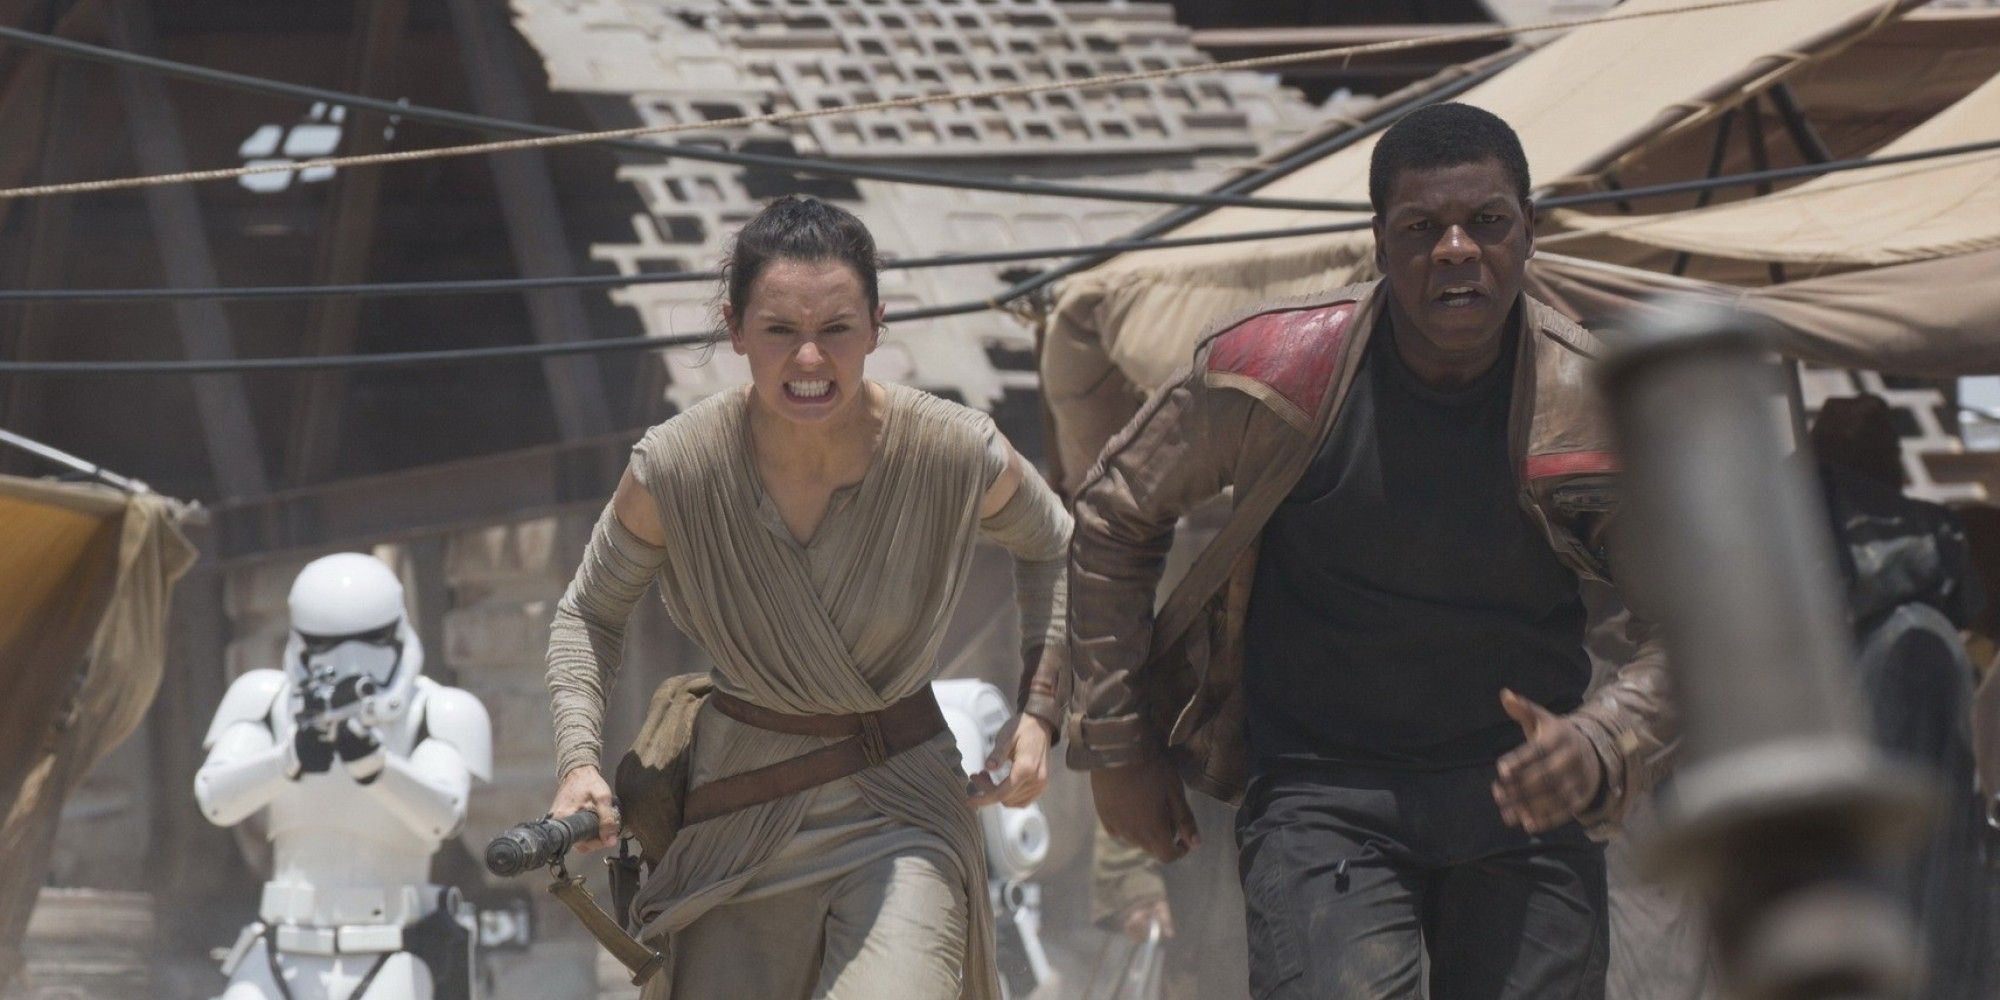 Daisy Ridley as Rey and John Boyega as Finn in Star Wars Episode 7 The Force Awakens